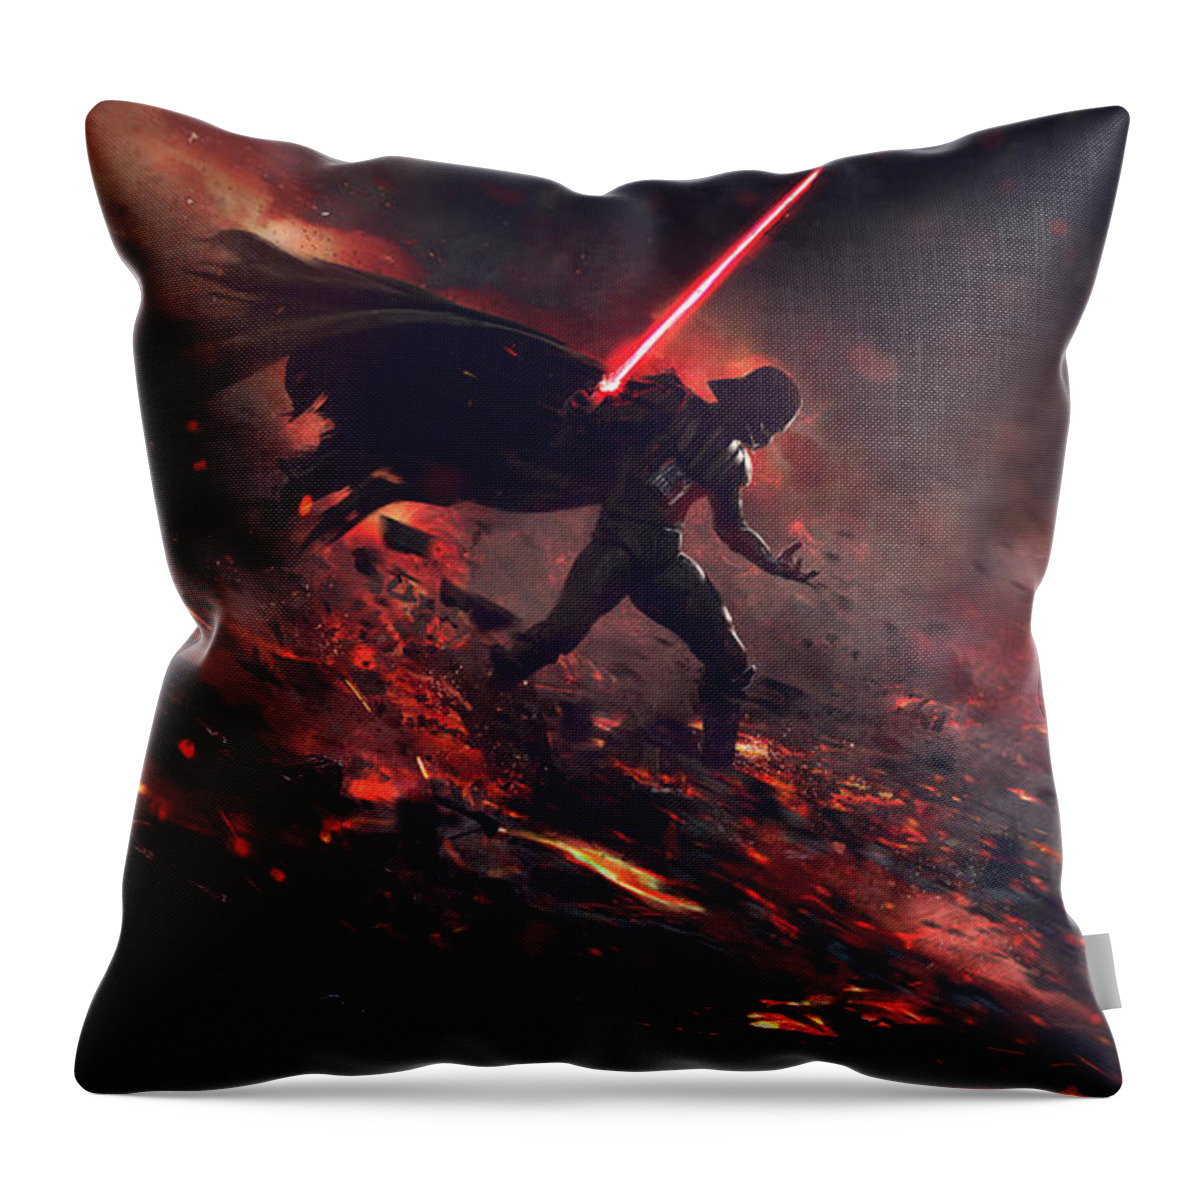 Lightsabers Throw Pillow featuring the digital art Vader vs Ahsoka by Exar Kun